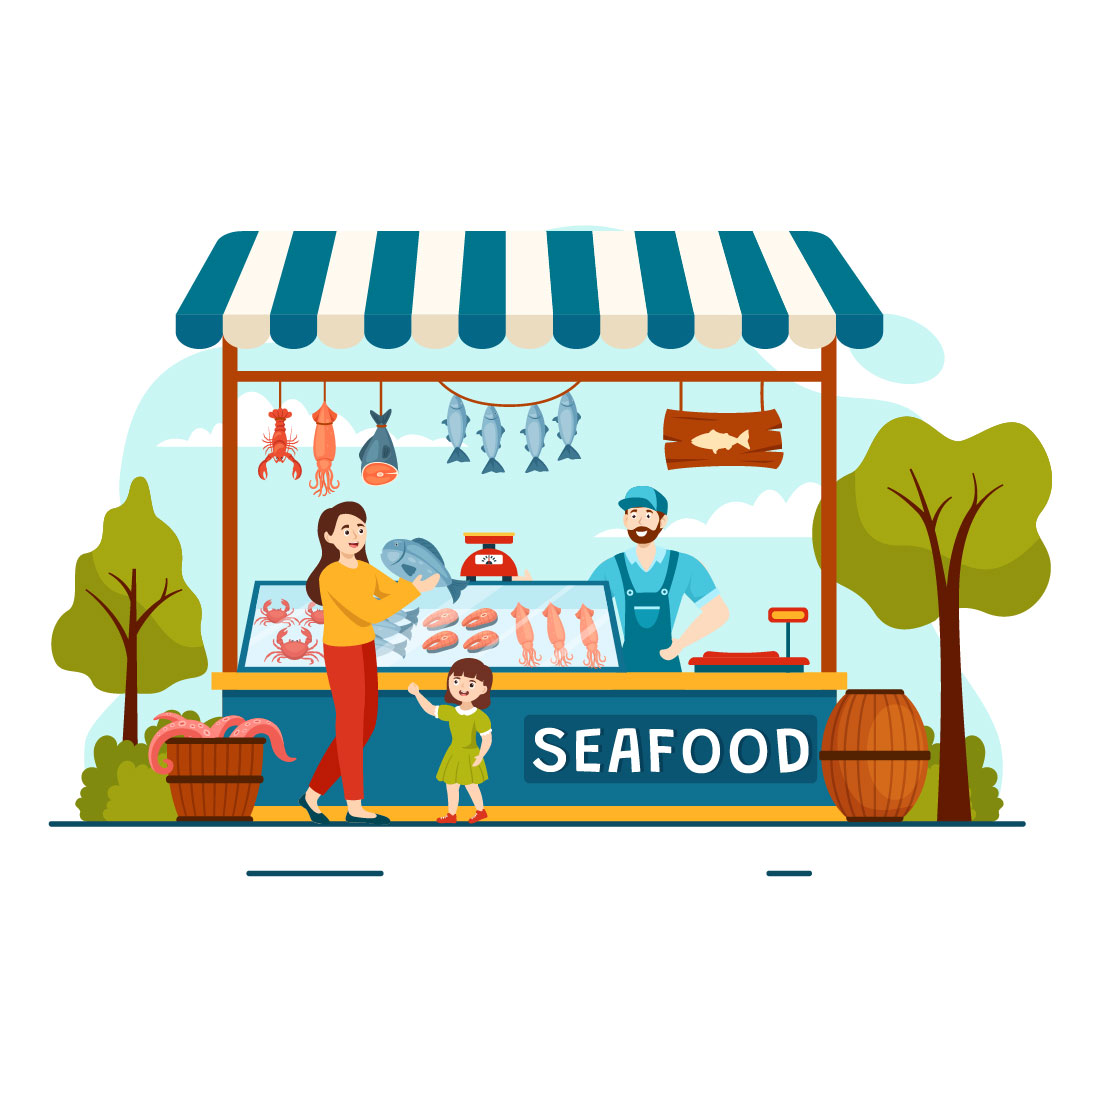 14 Seafood Market Illustration cover image.